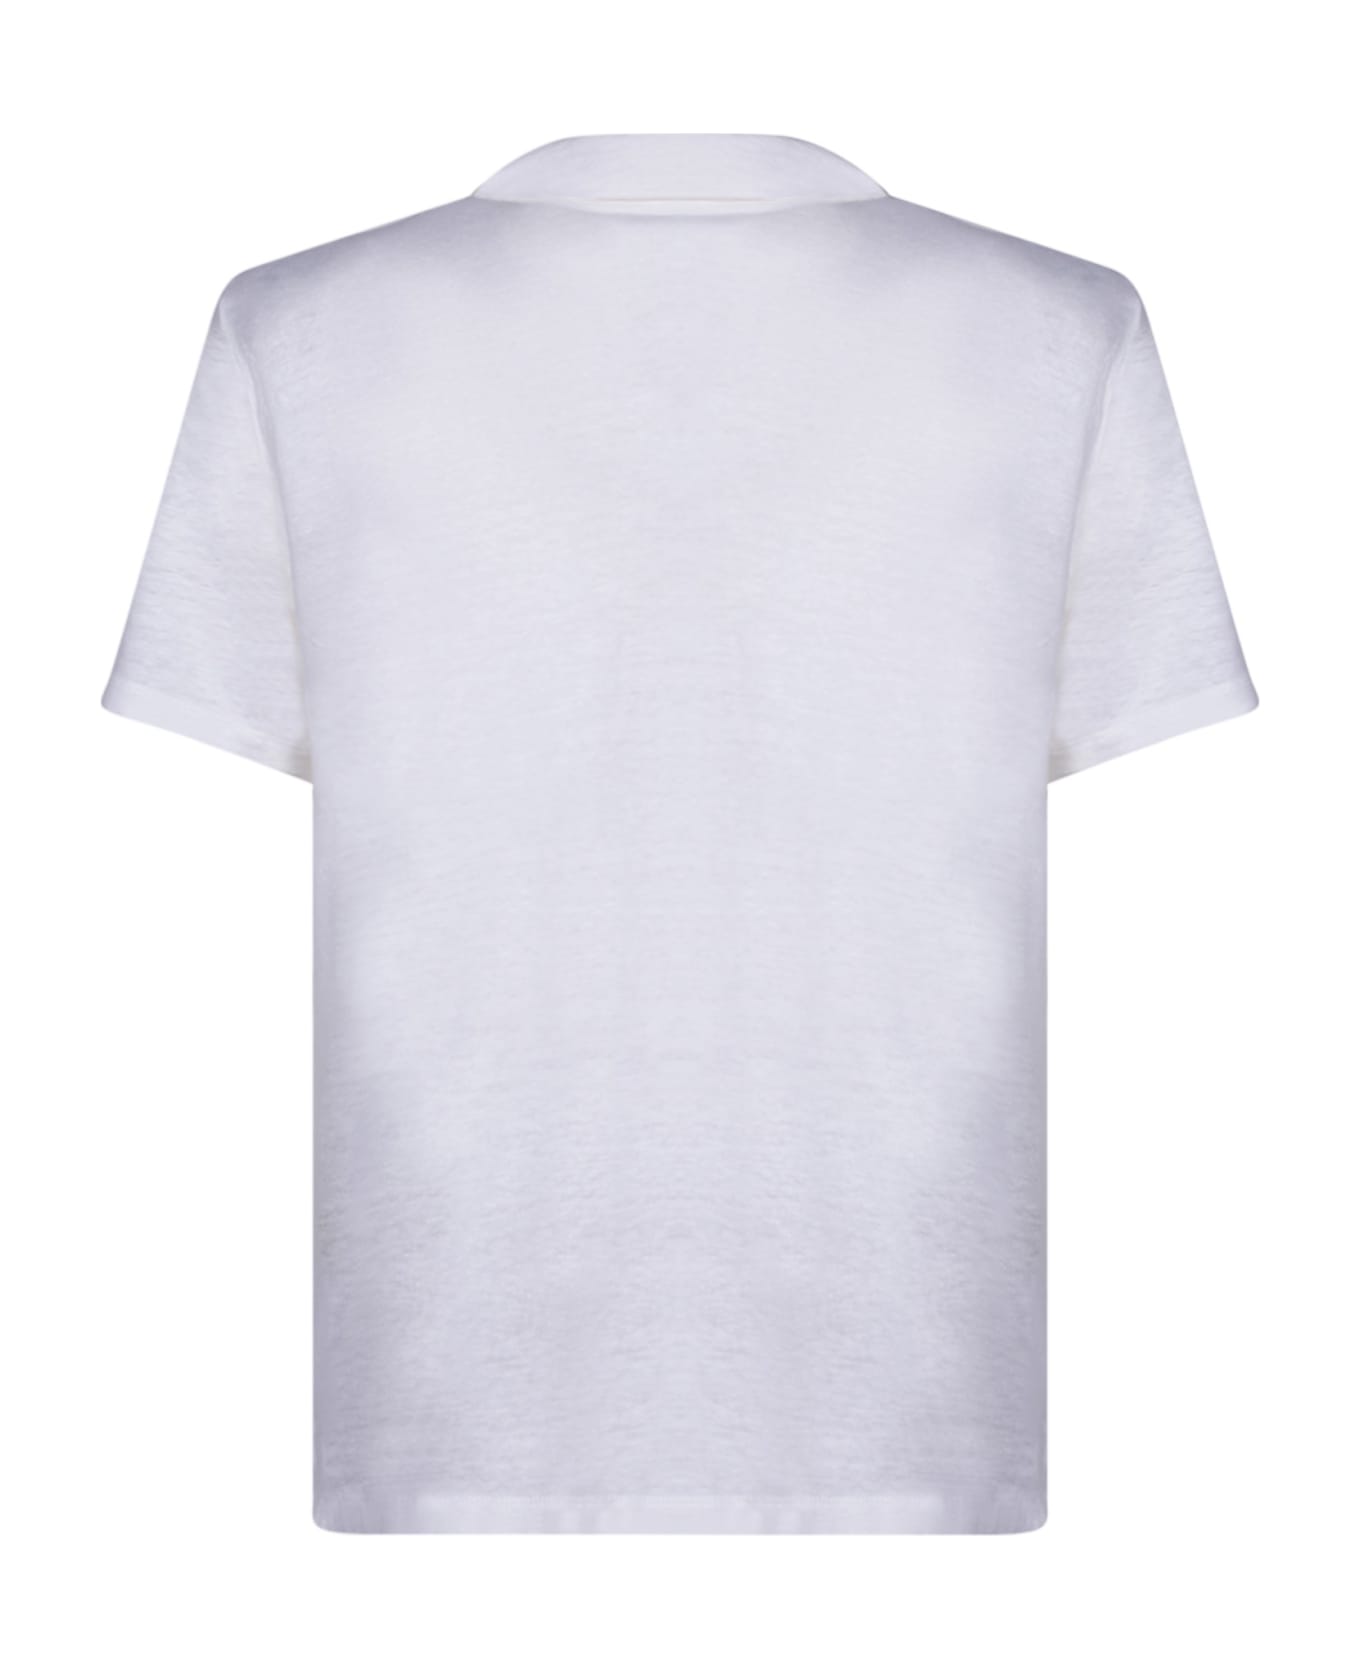 Officine Générale Short Sleeves White Polo Shirt - White